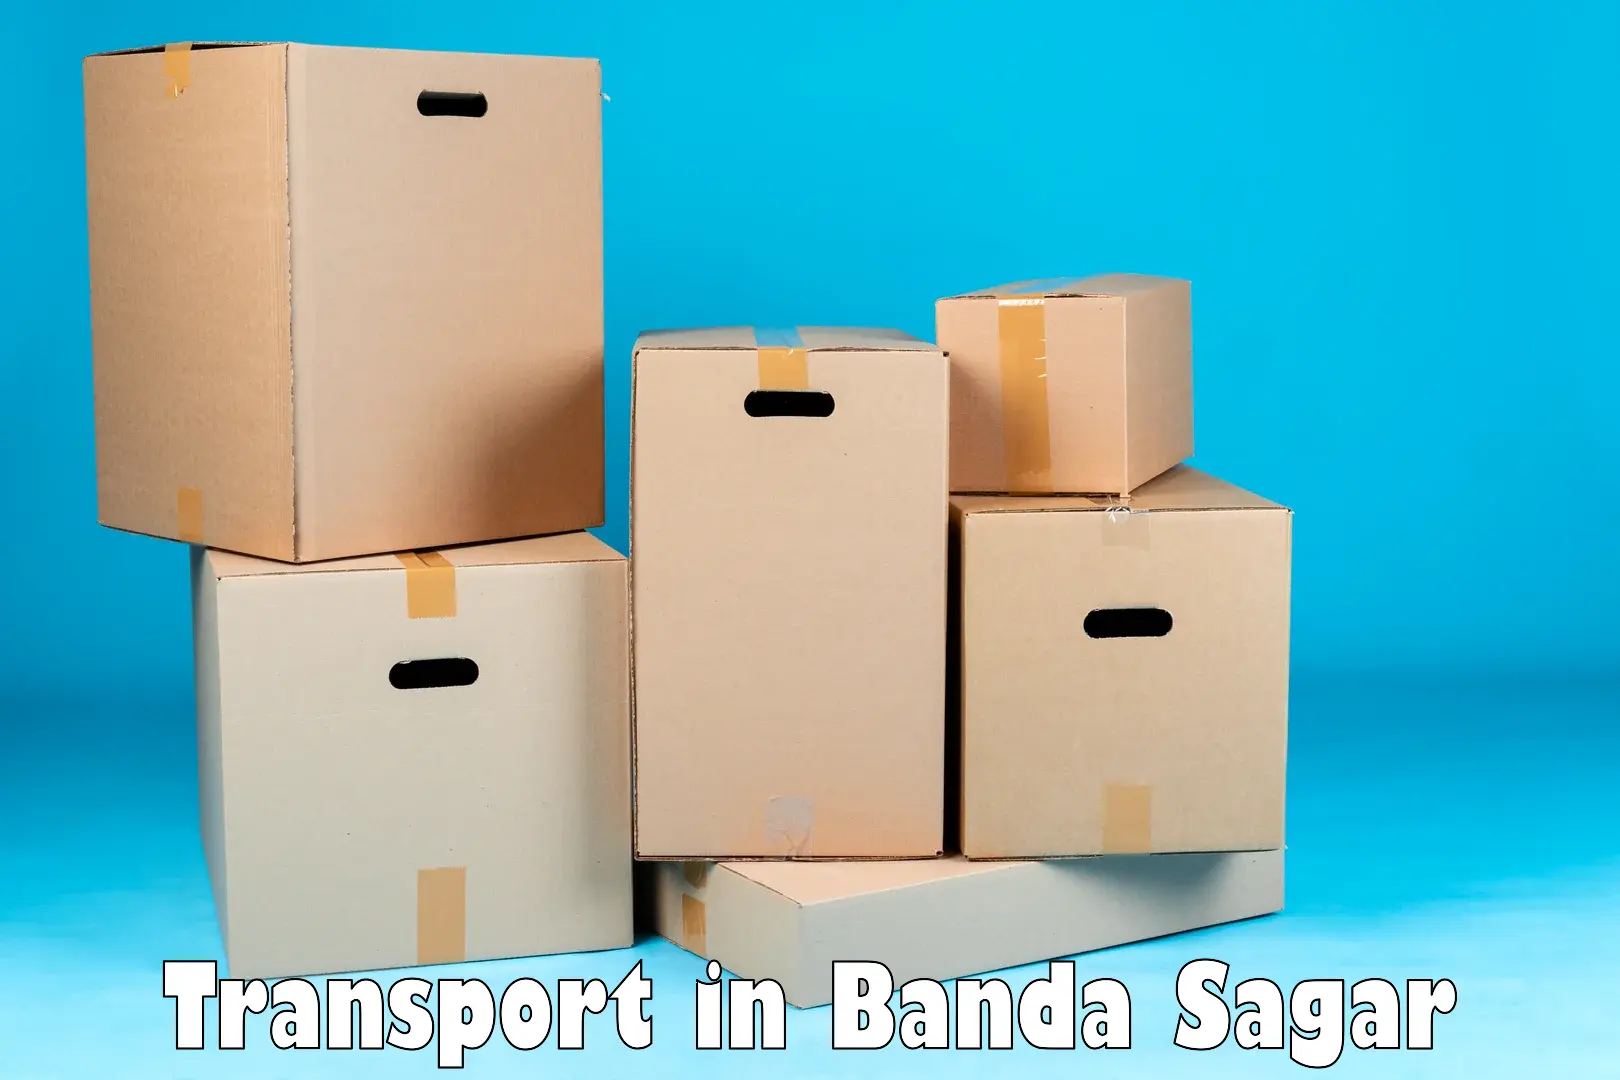 Interstate goods transport in Banda Sagar